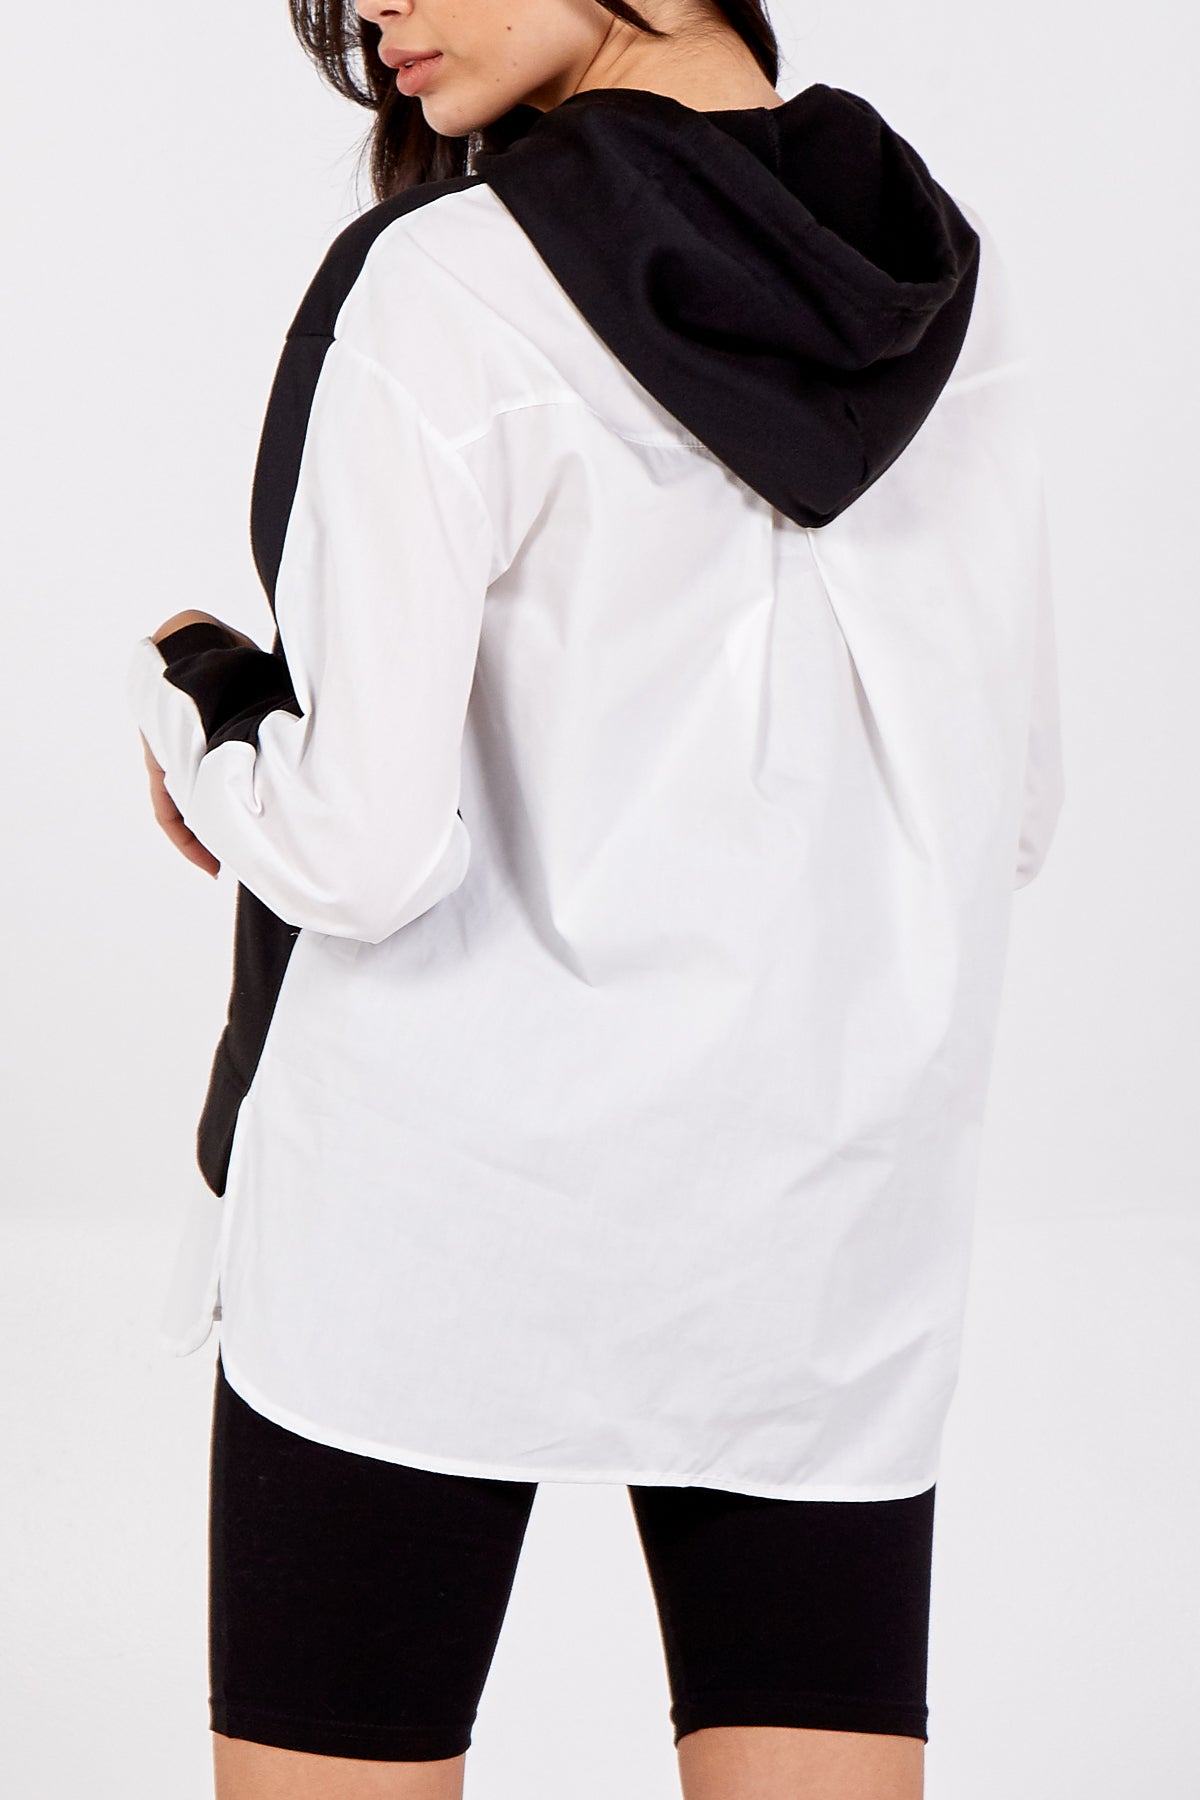 Pullover Sweatshirt Hoodie With White Undershirt